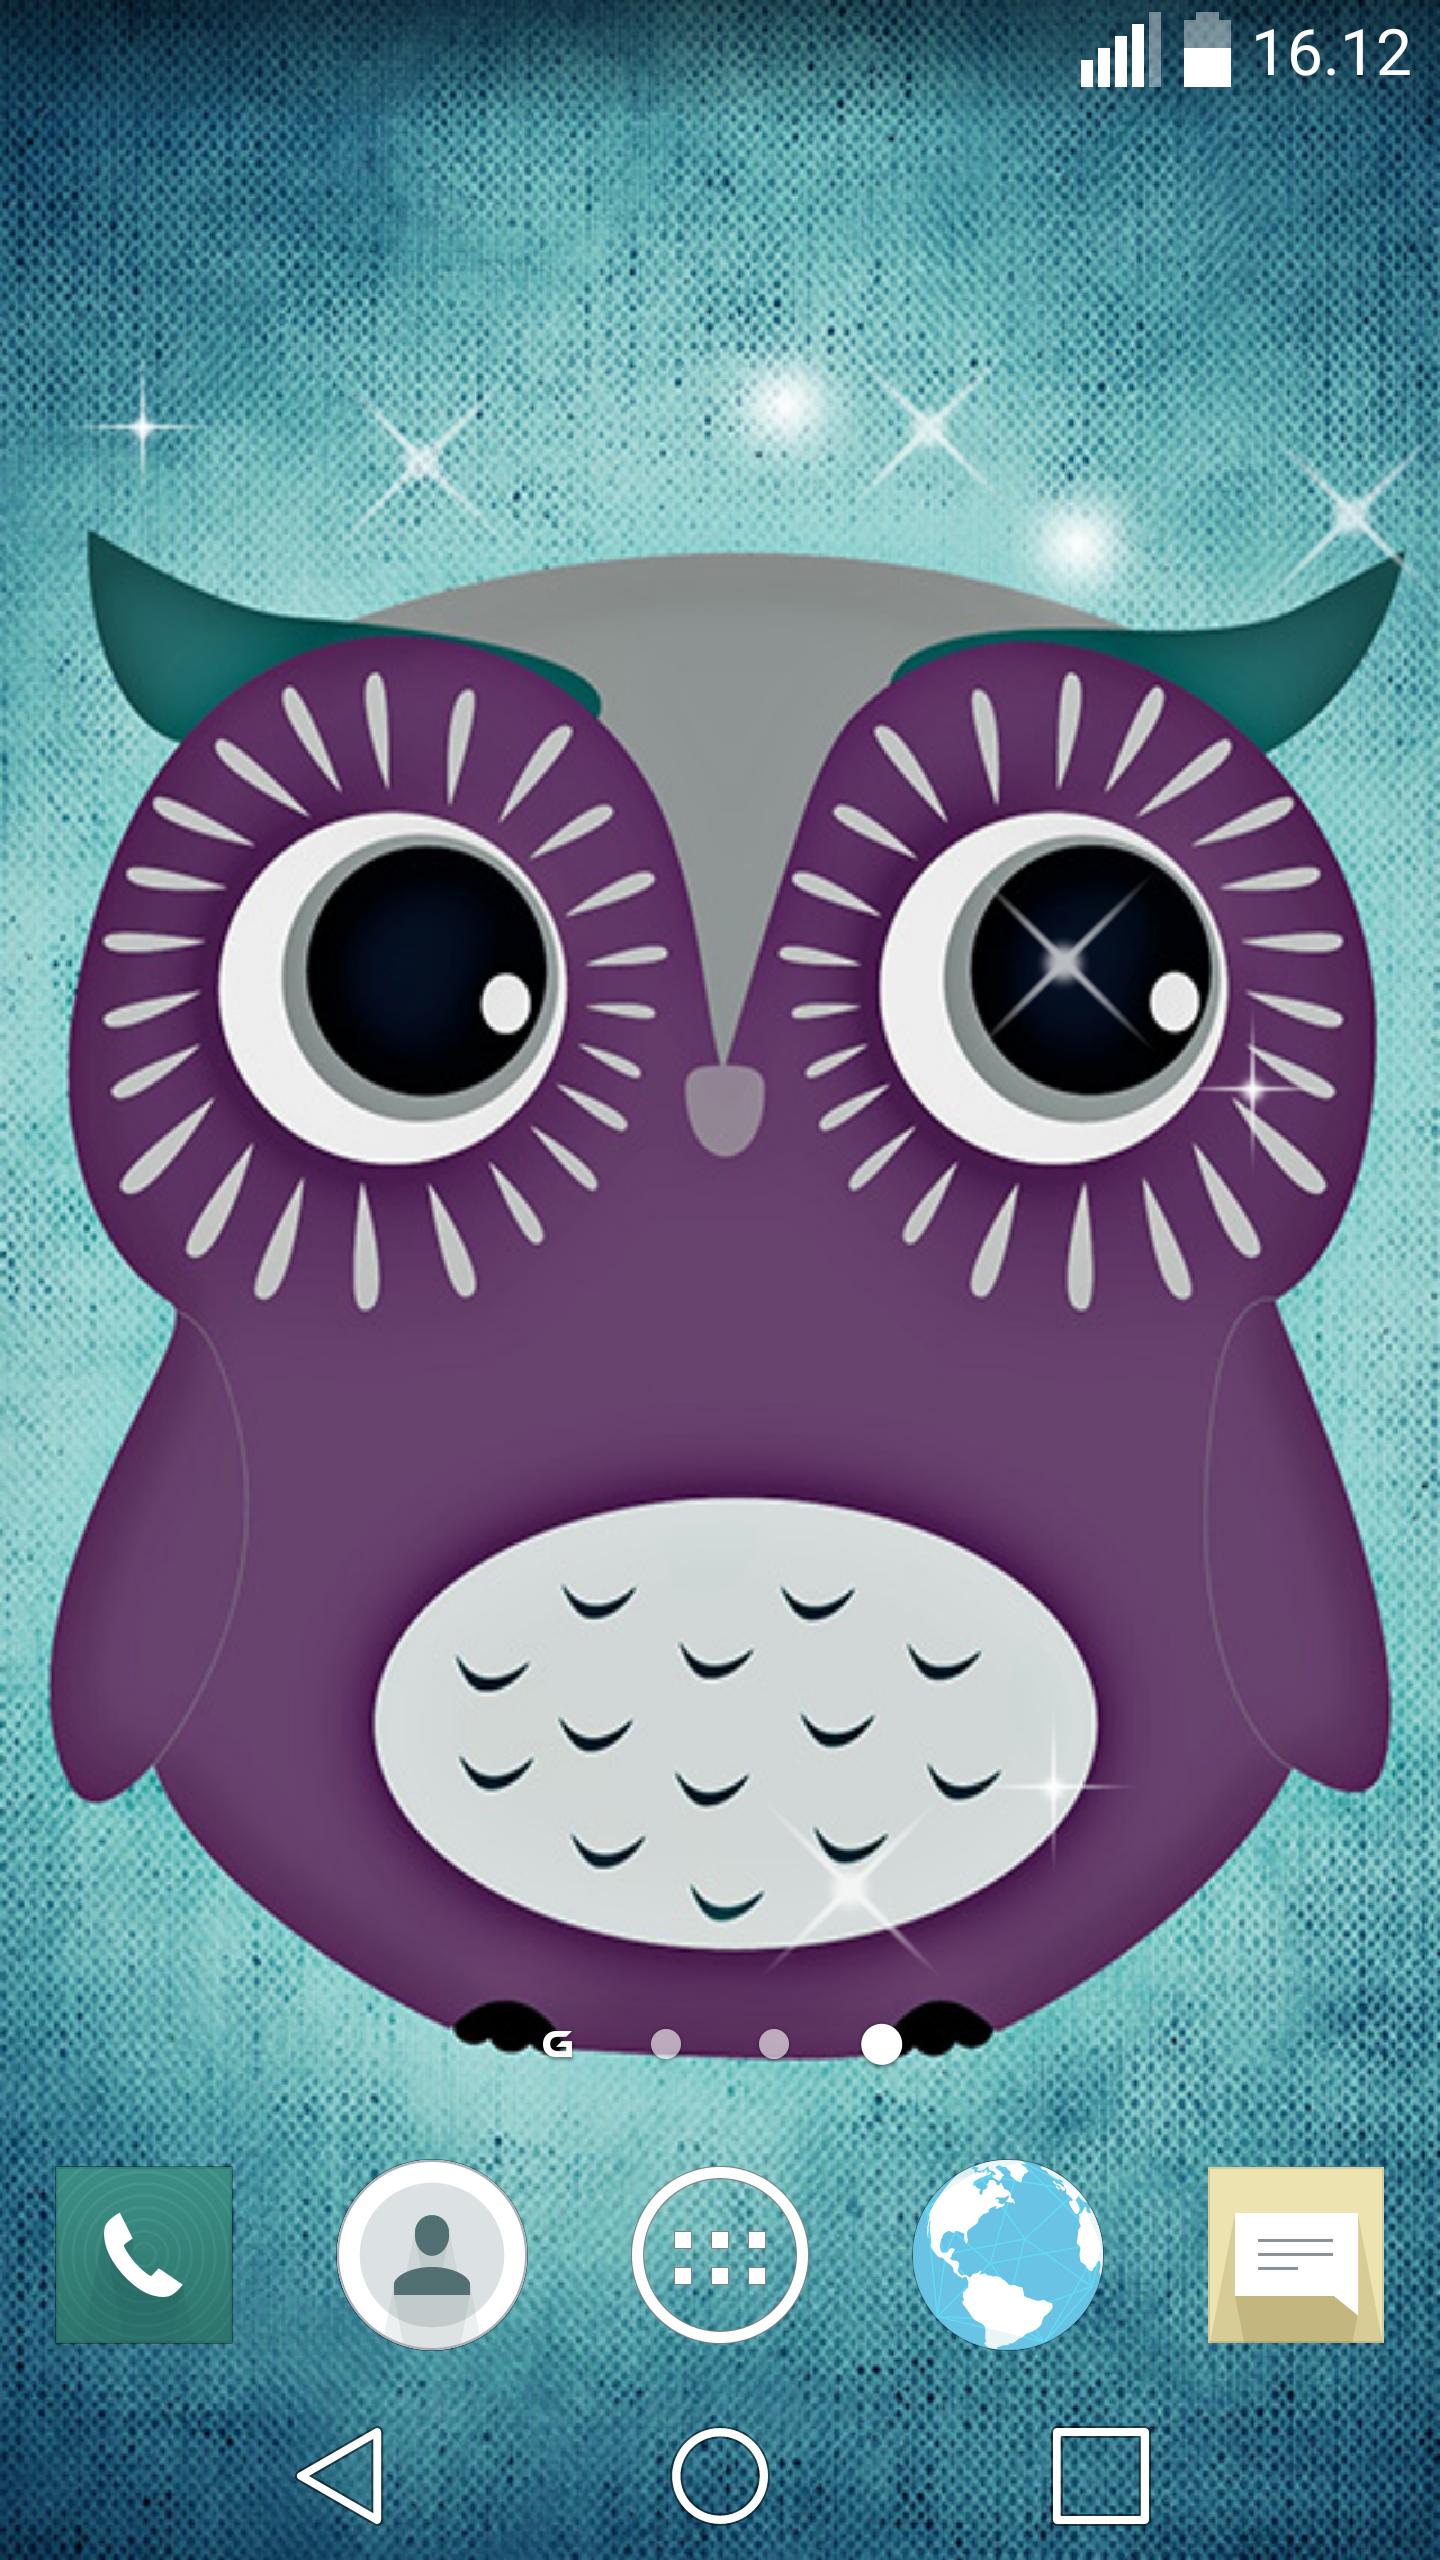 Burung Hantu Wallpaper Animasi For Android Apk Download